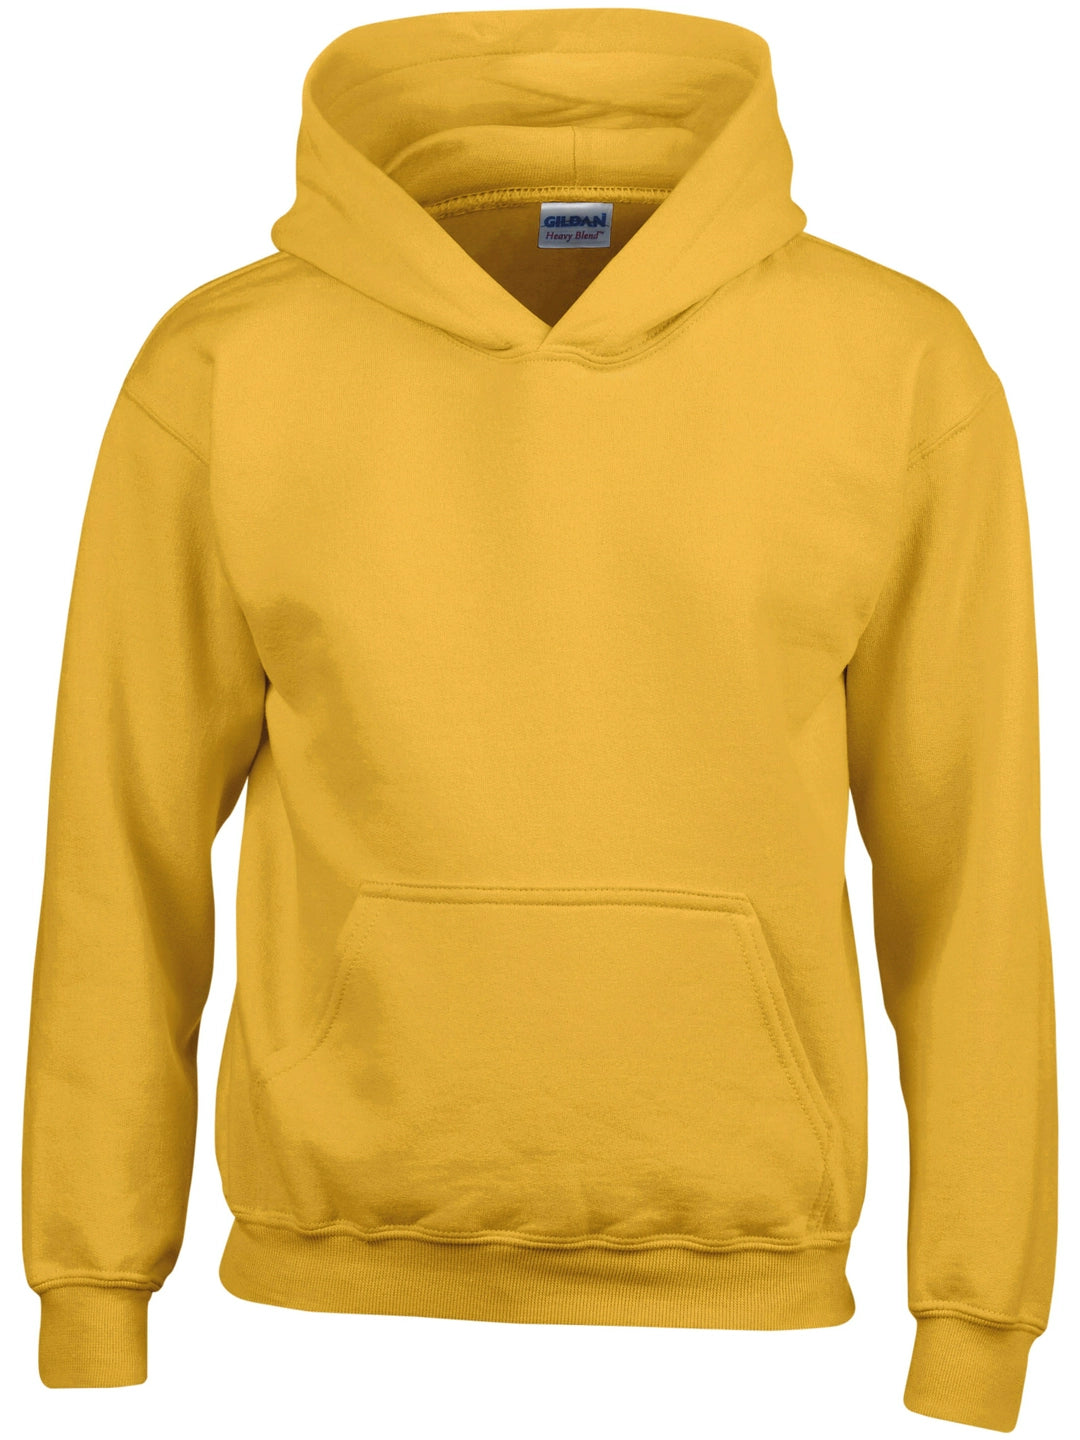 Gildan 18500B Kids Youth Heavy Blend Hooded Sweatshirt - COOZO